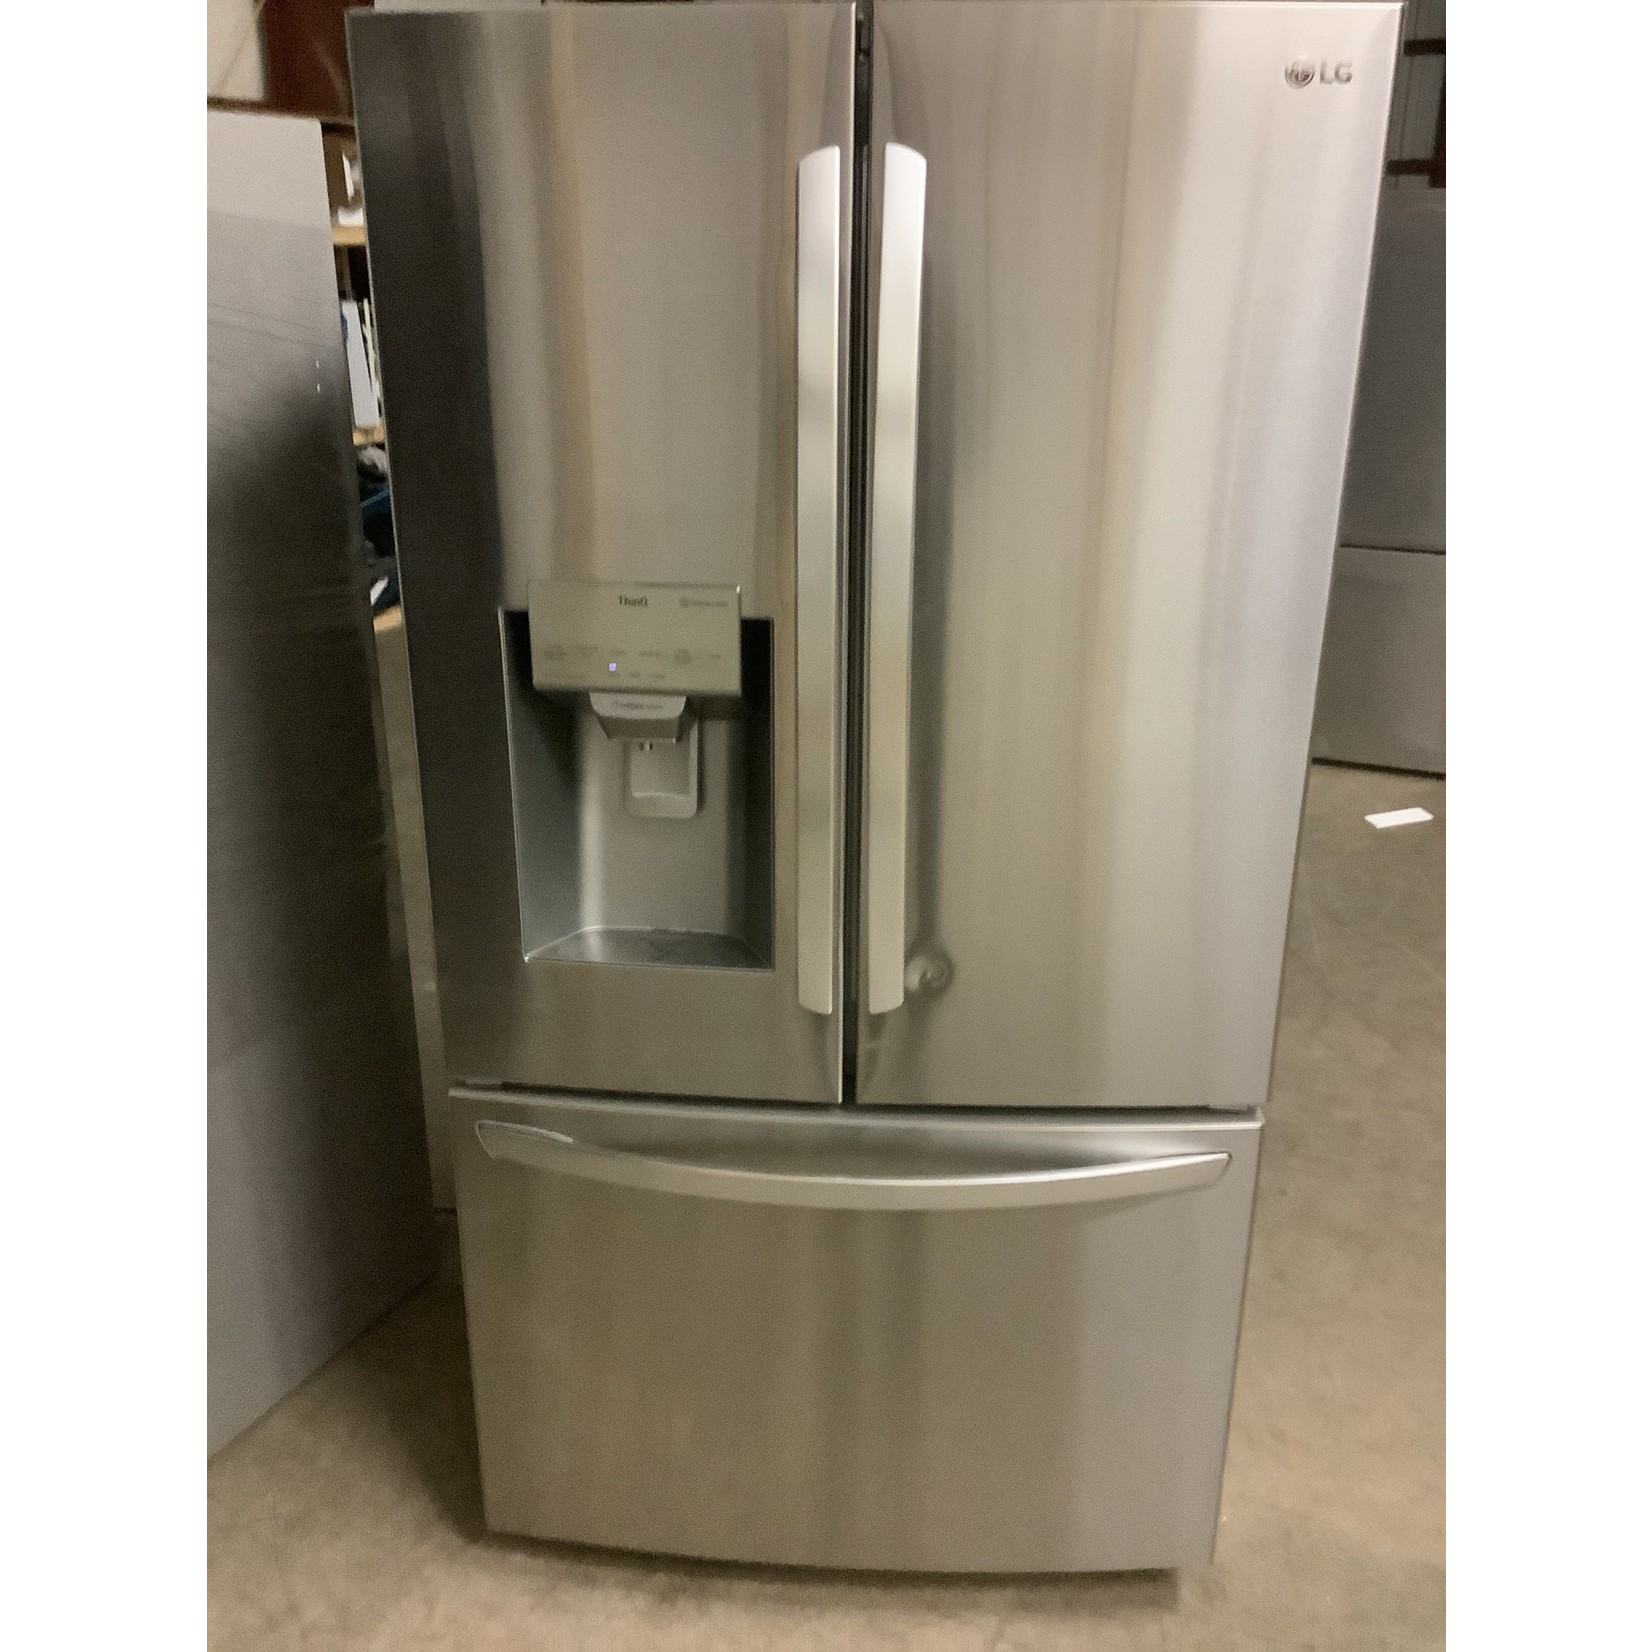 LG 3door refrigerator